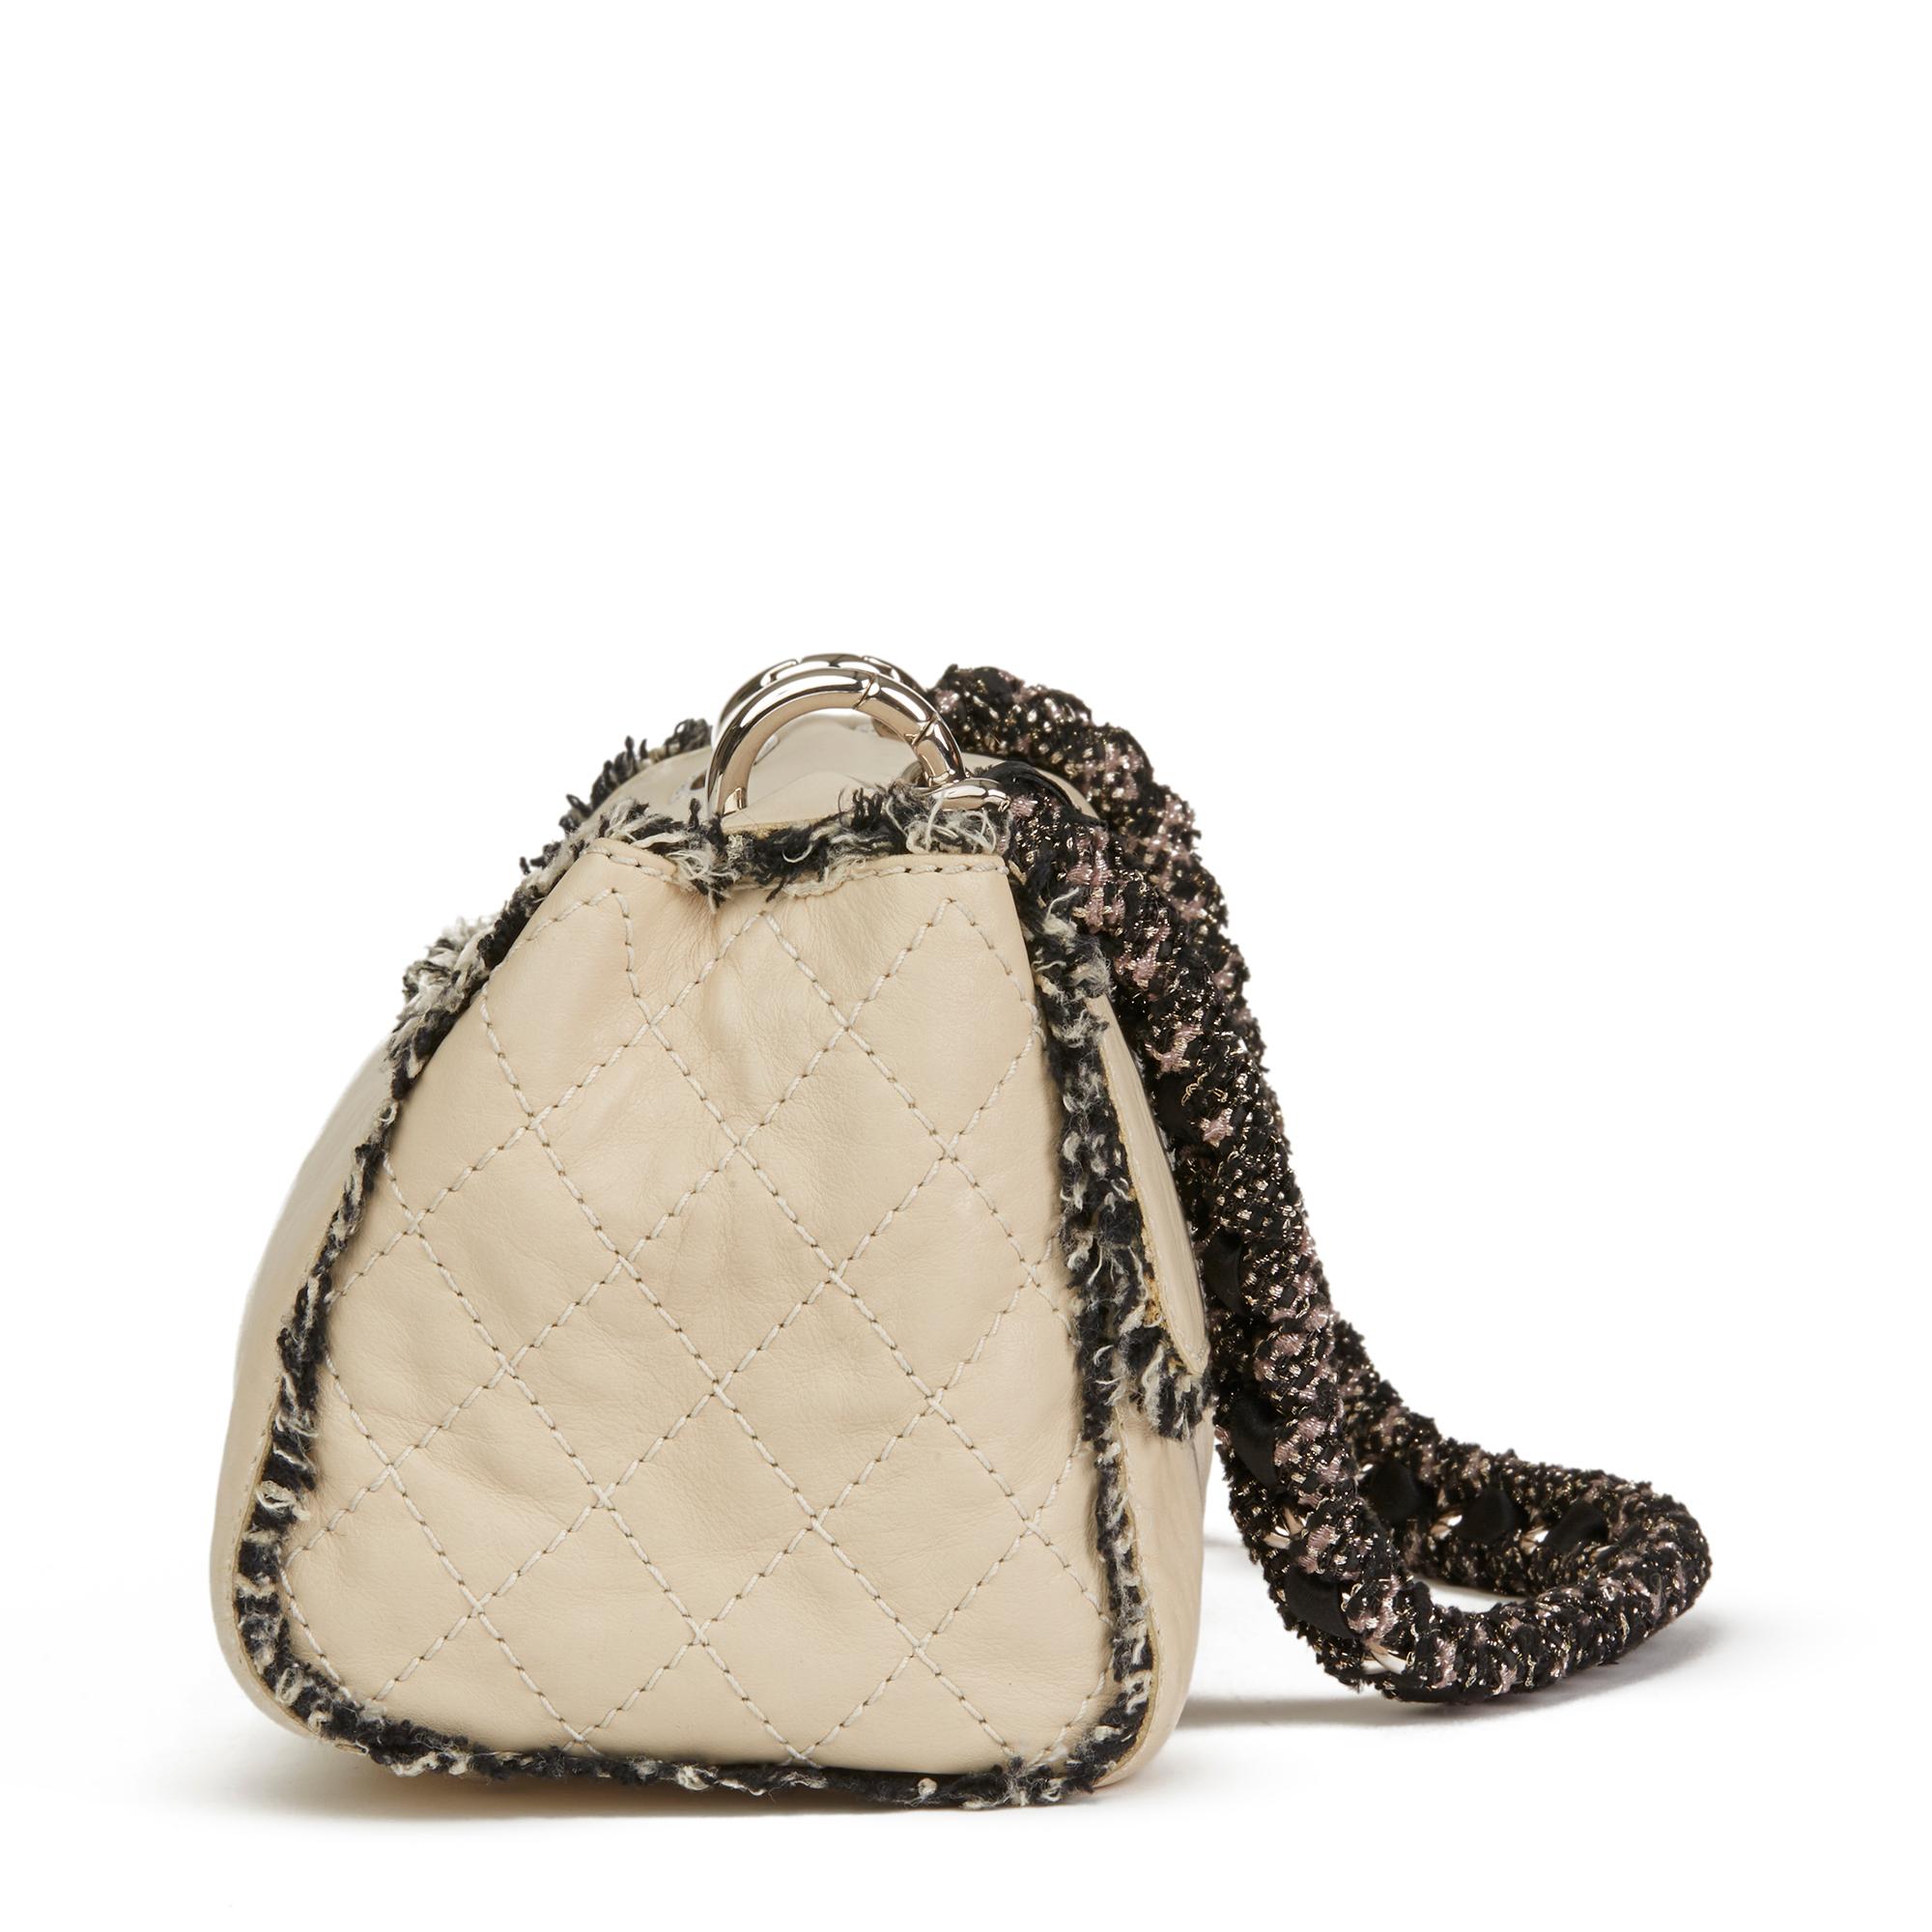 White 2009 Chanel Ivory Lambskin Leather & Black Tweed Classic Shoulder Bag